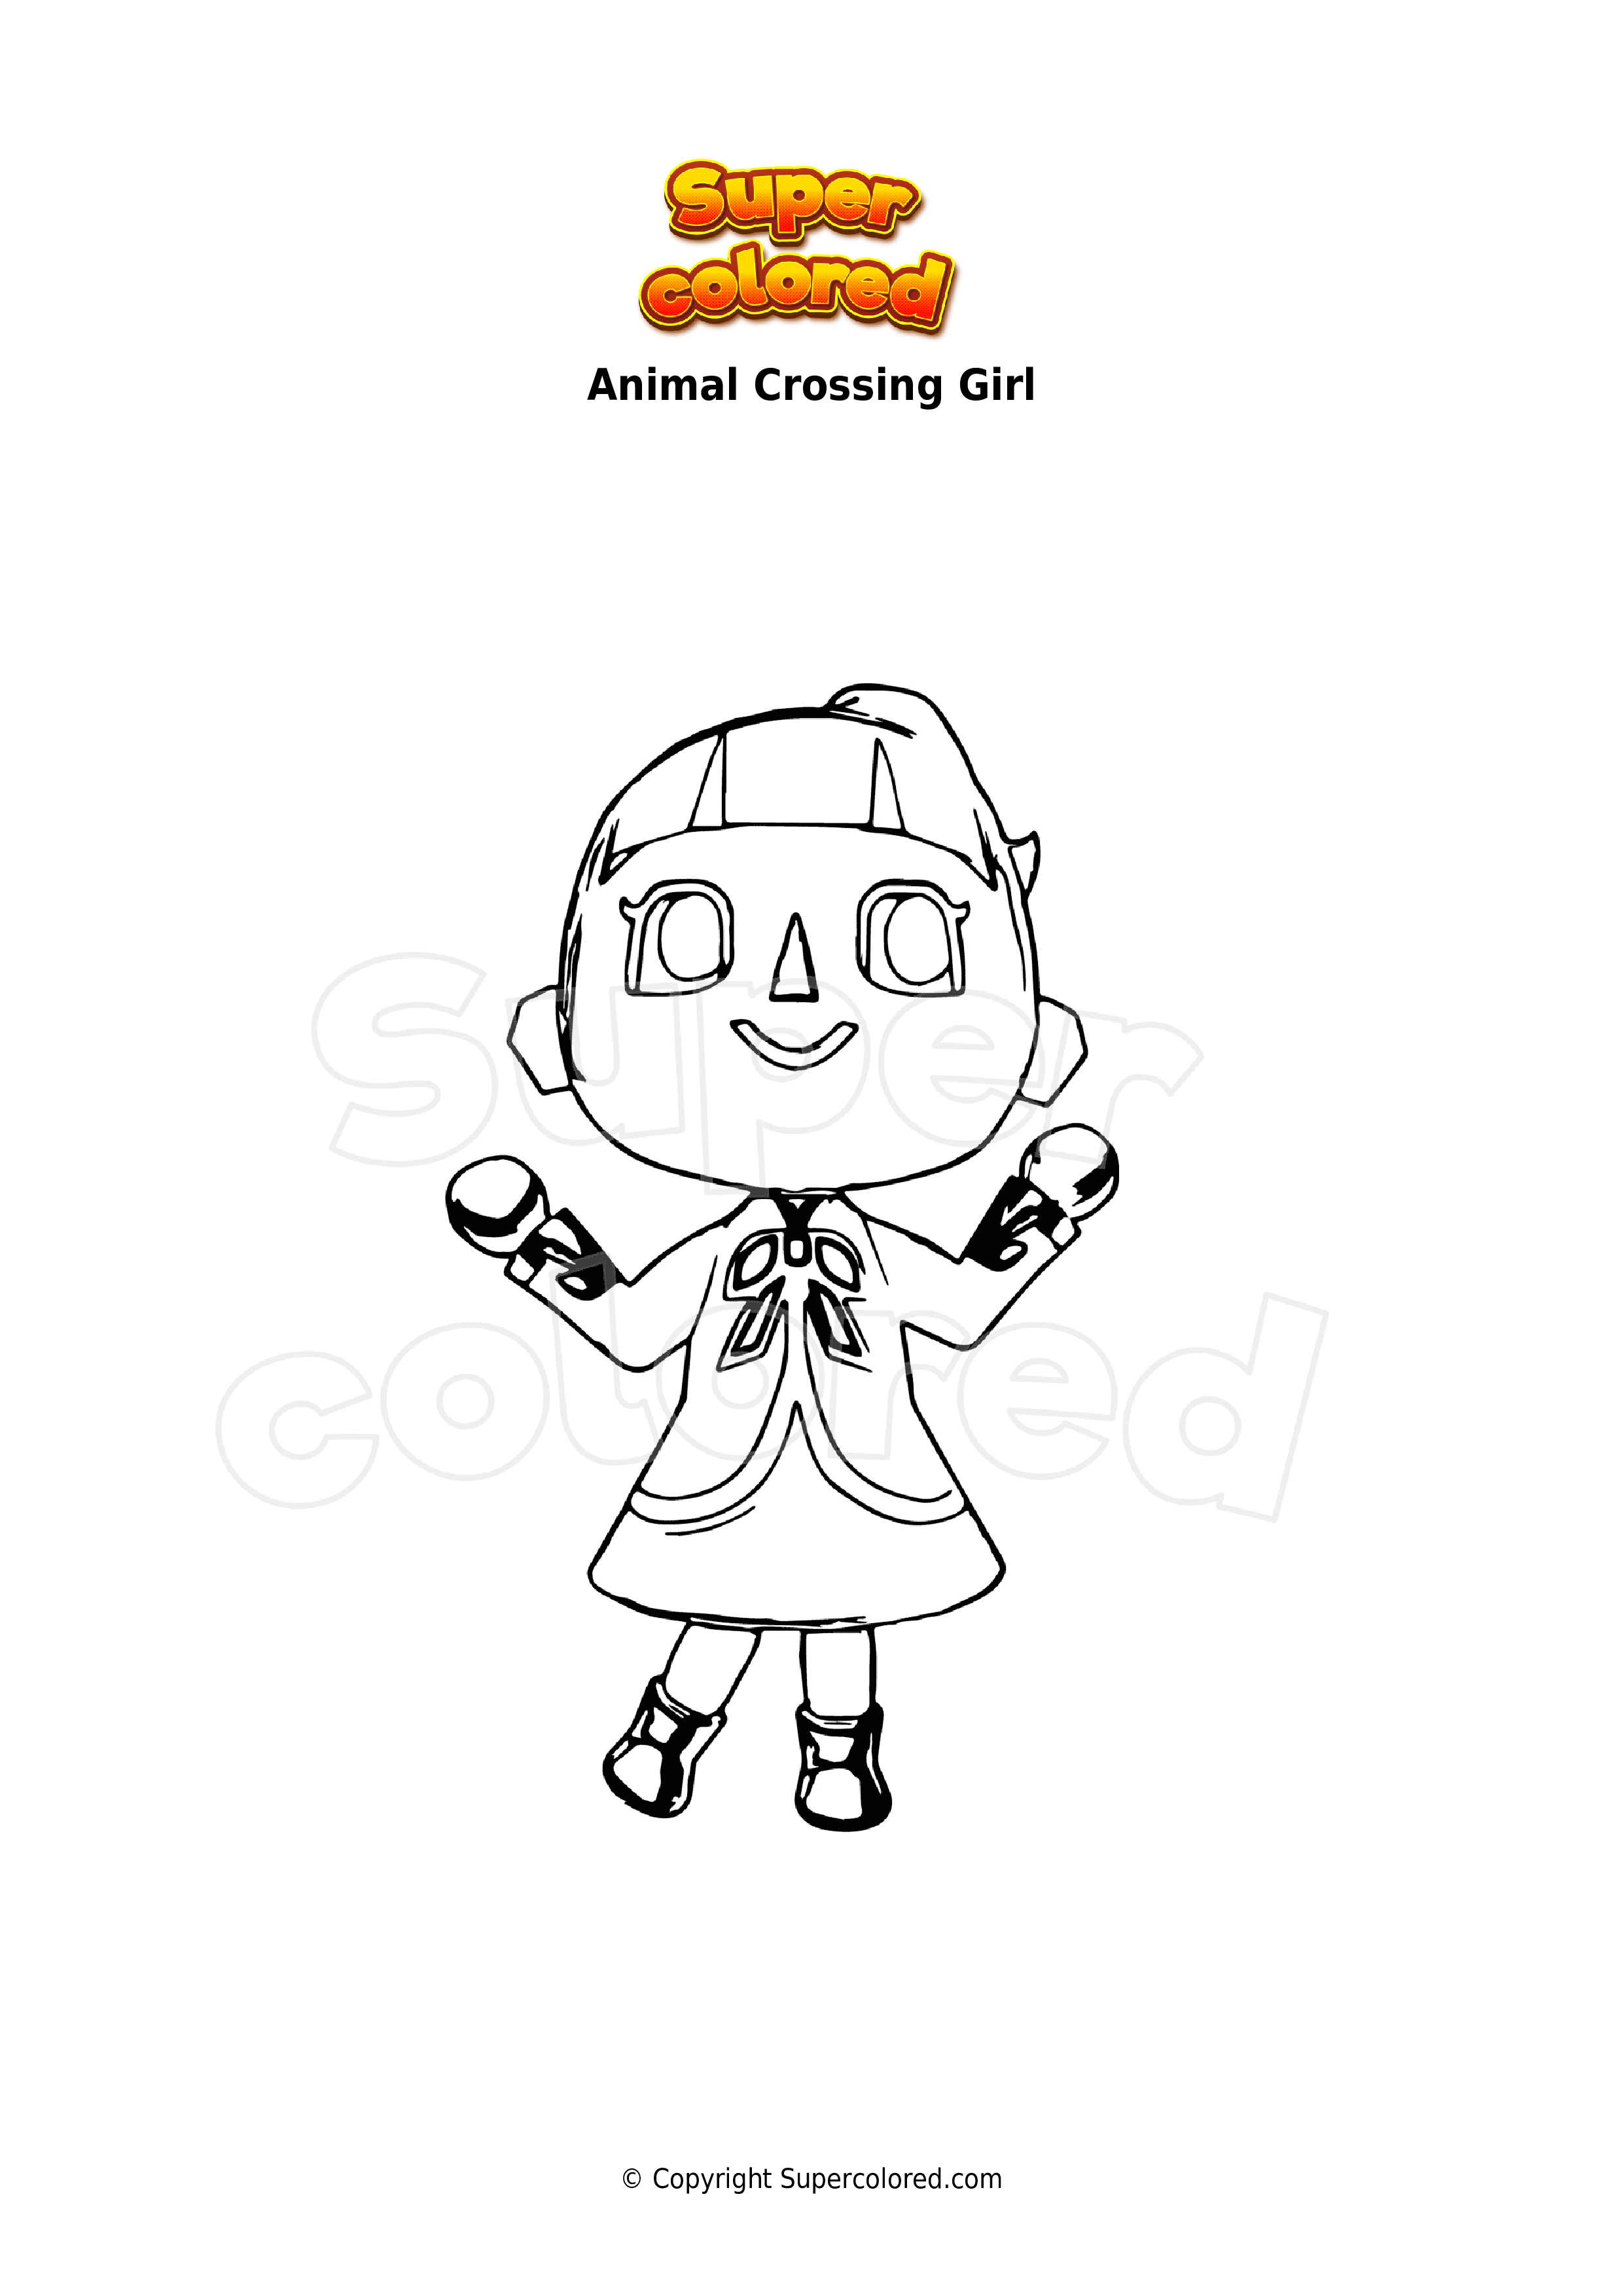 Coloriage Animal Crossing Girl - Supercolored.com